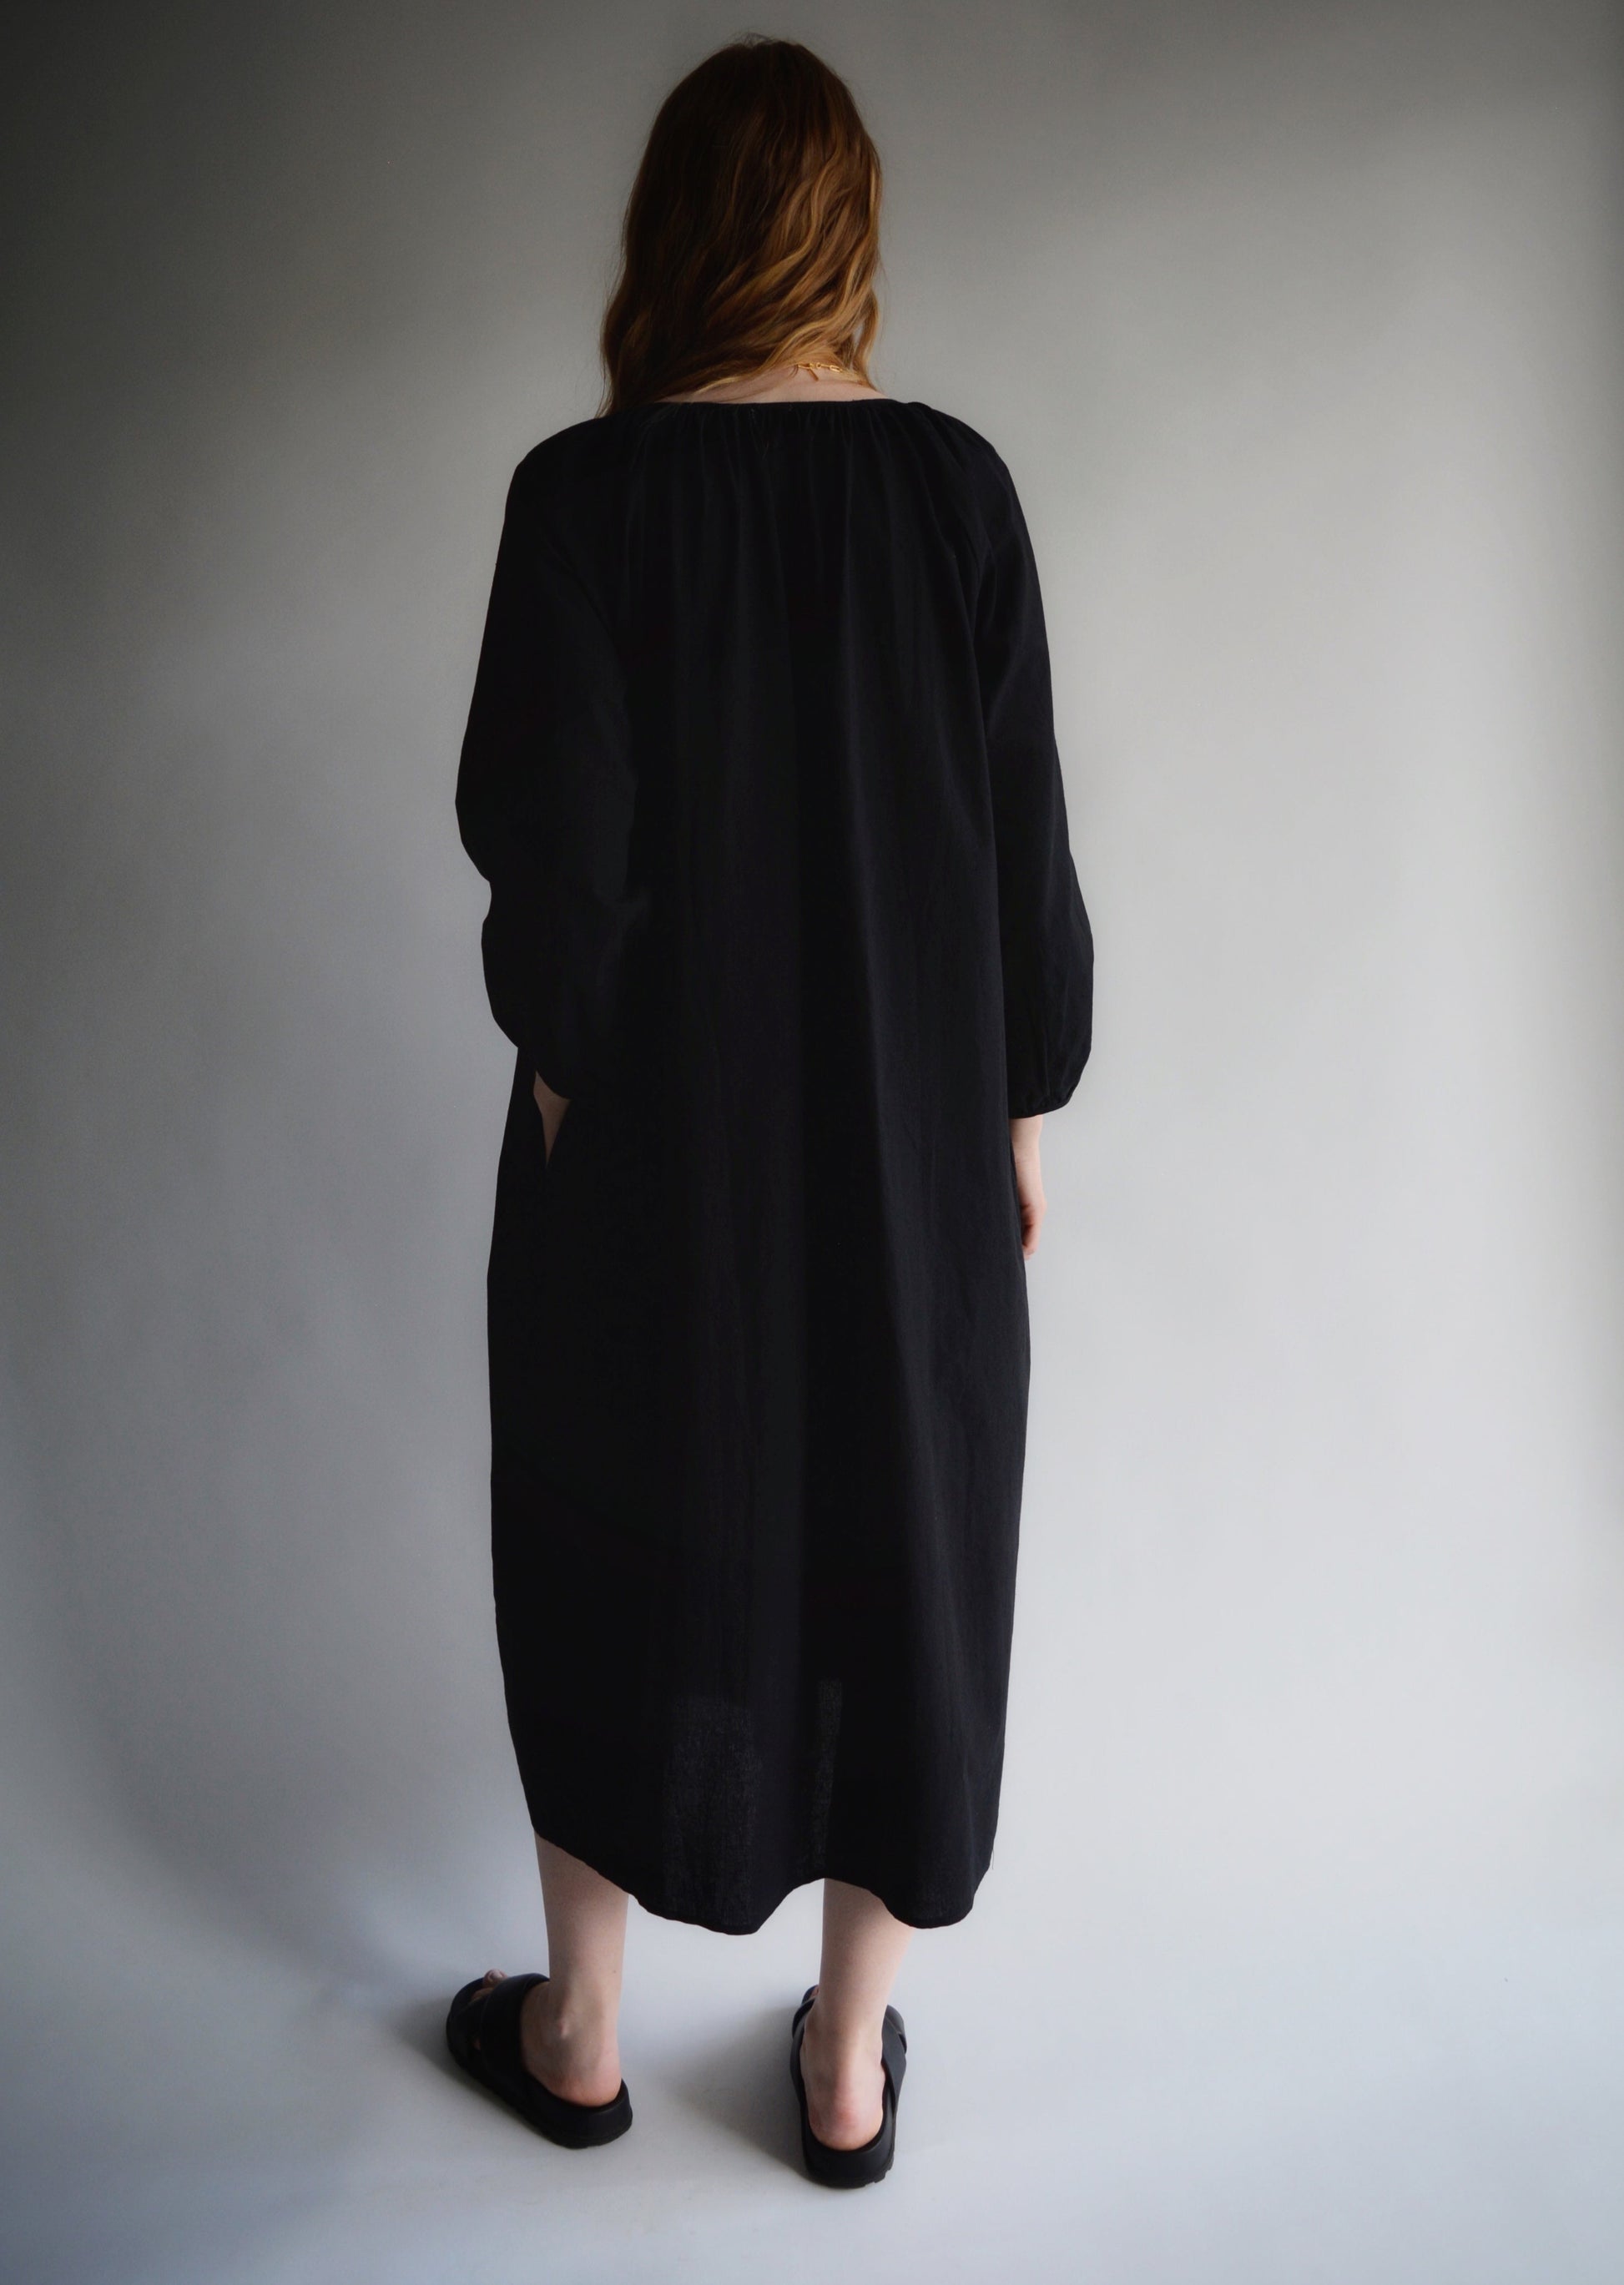 Oversized dress in Black color